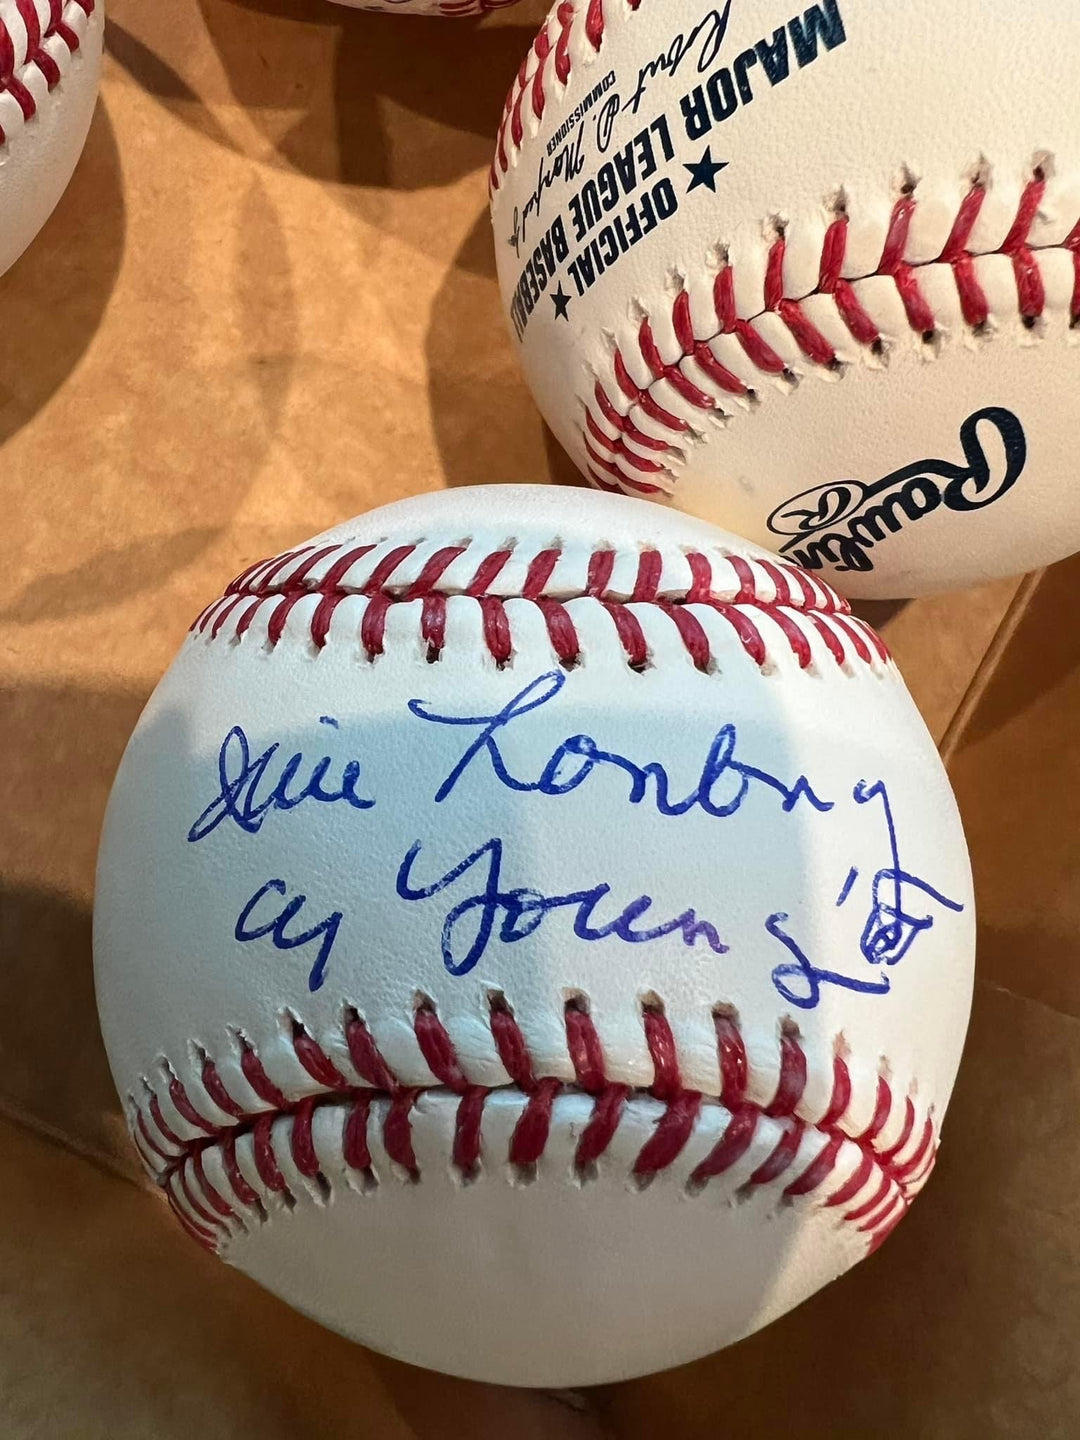 Jim Lonborg signed baseball